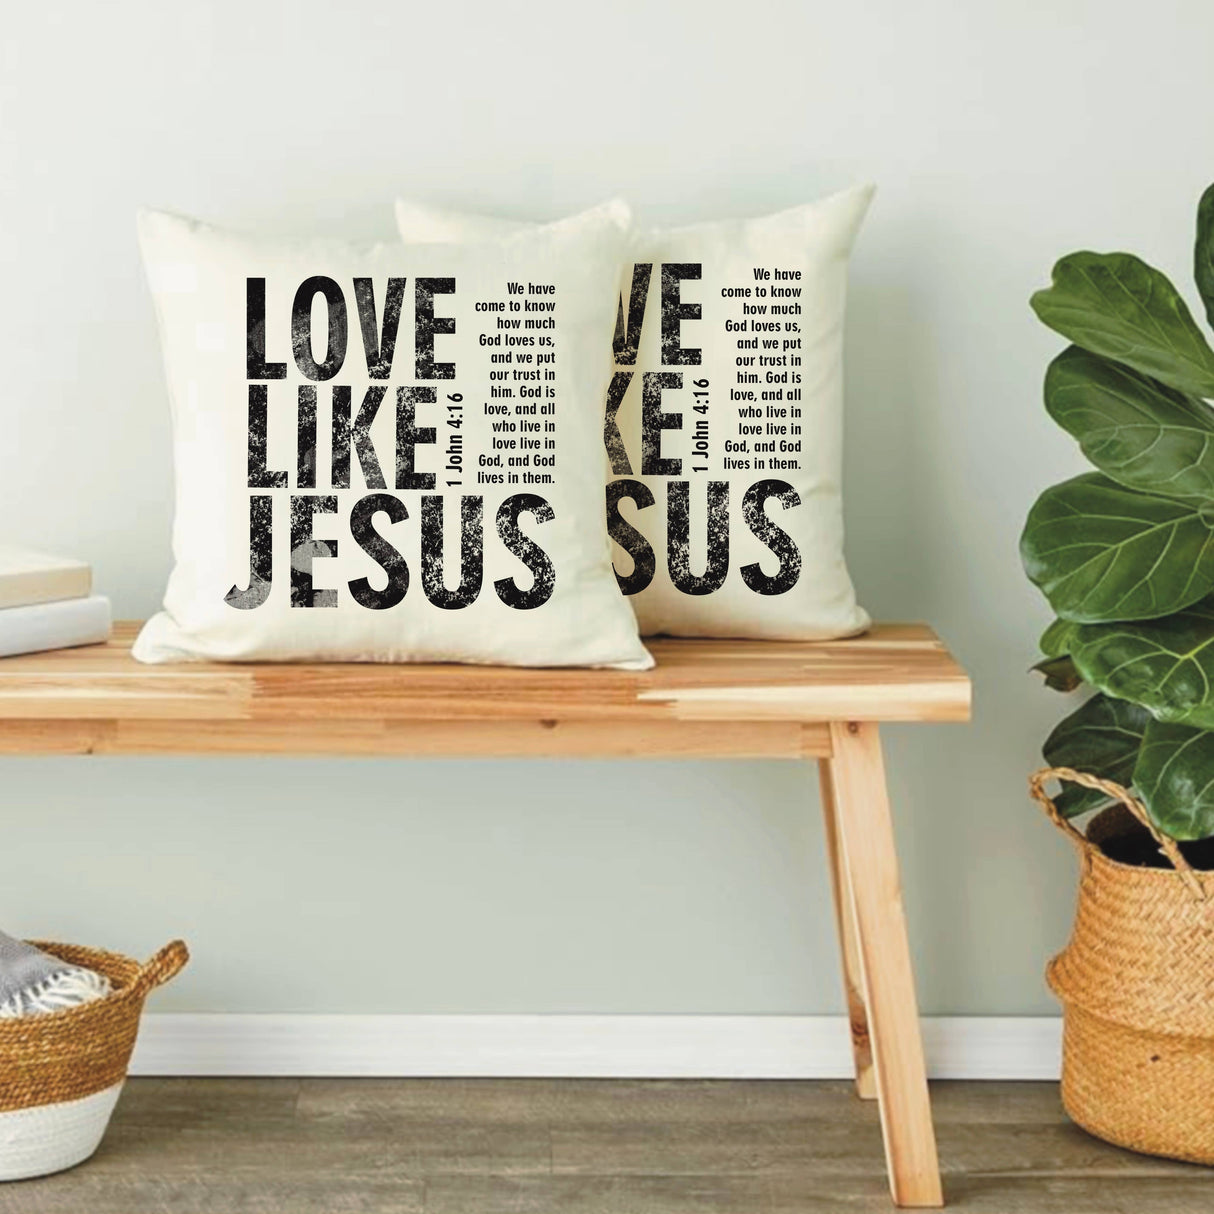 Canvas Pillow Decor Christian Gift Love Like Jesus 1 John 4